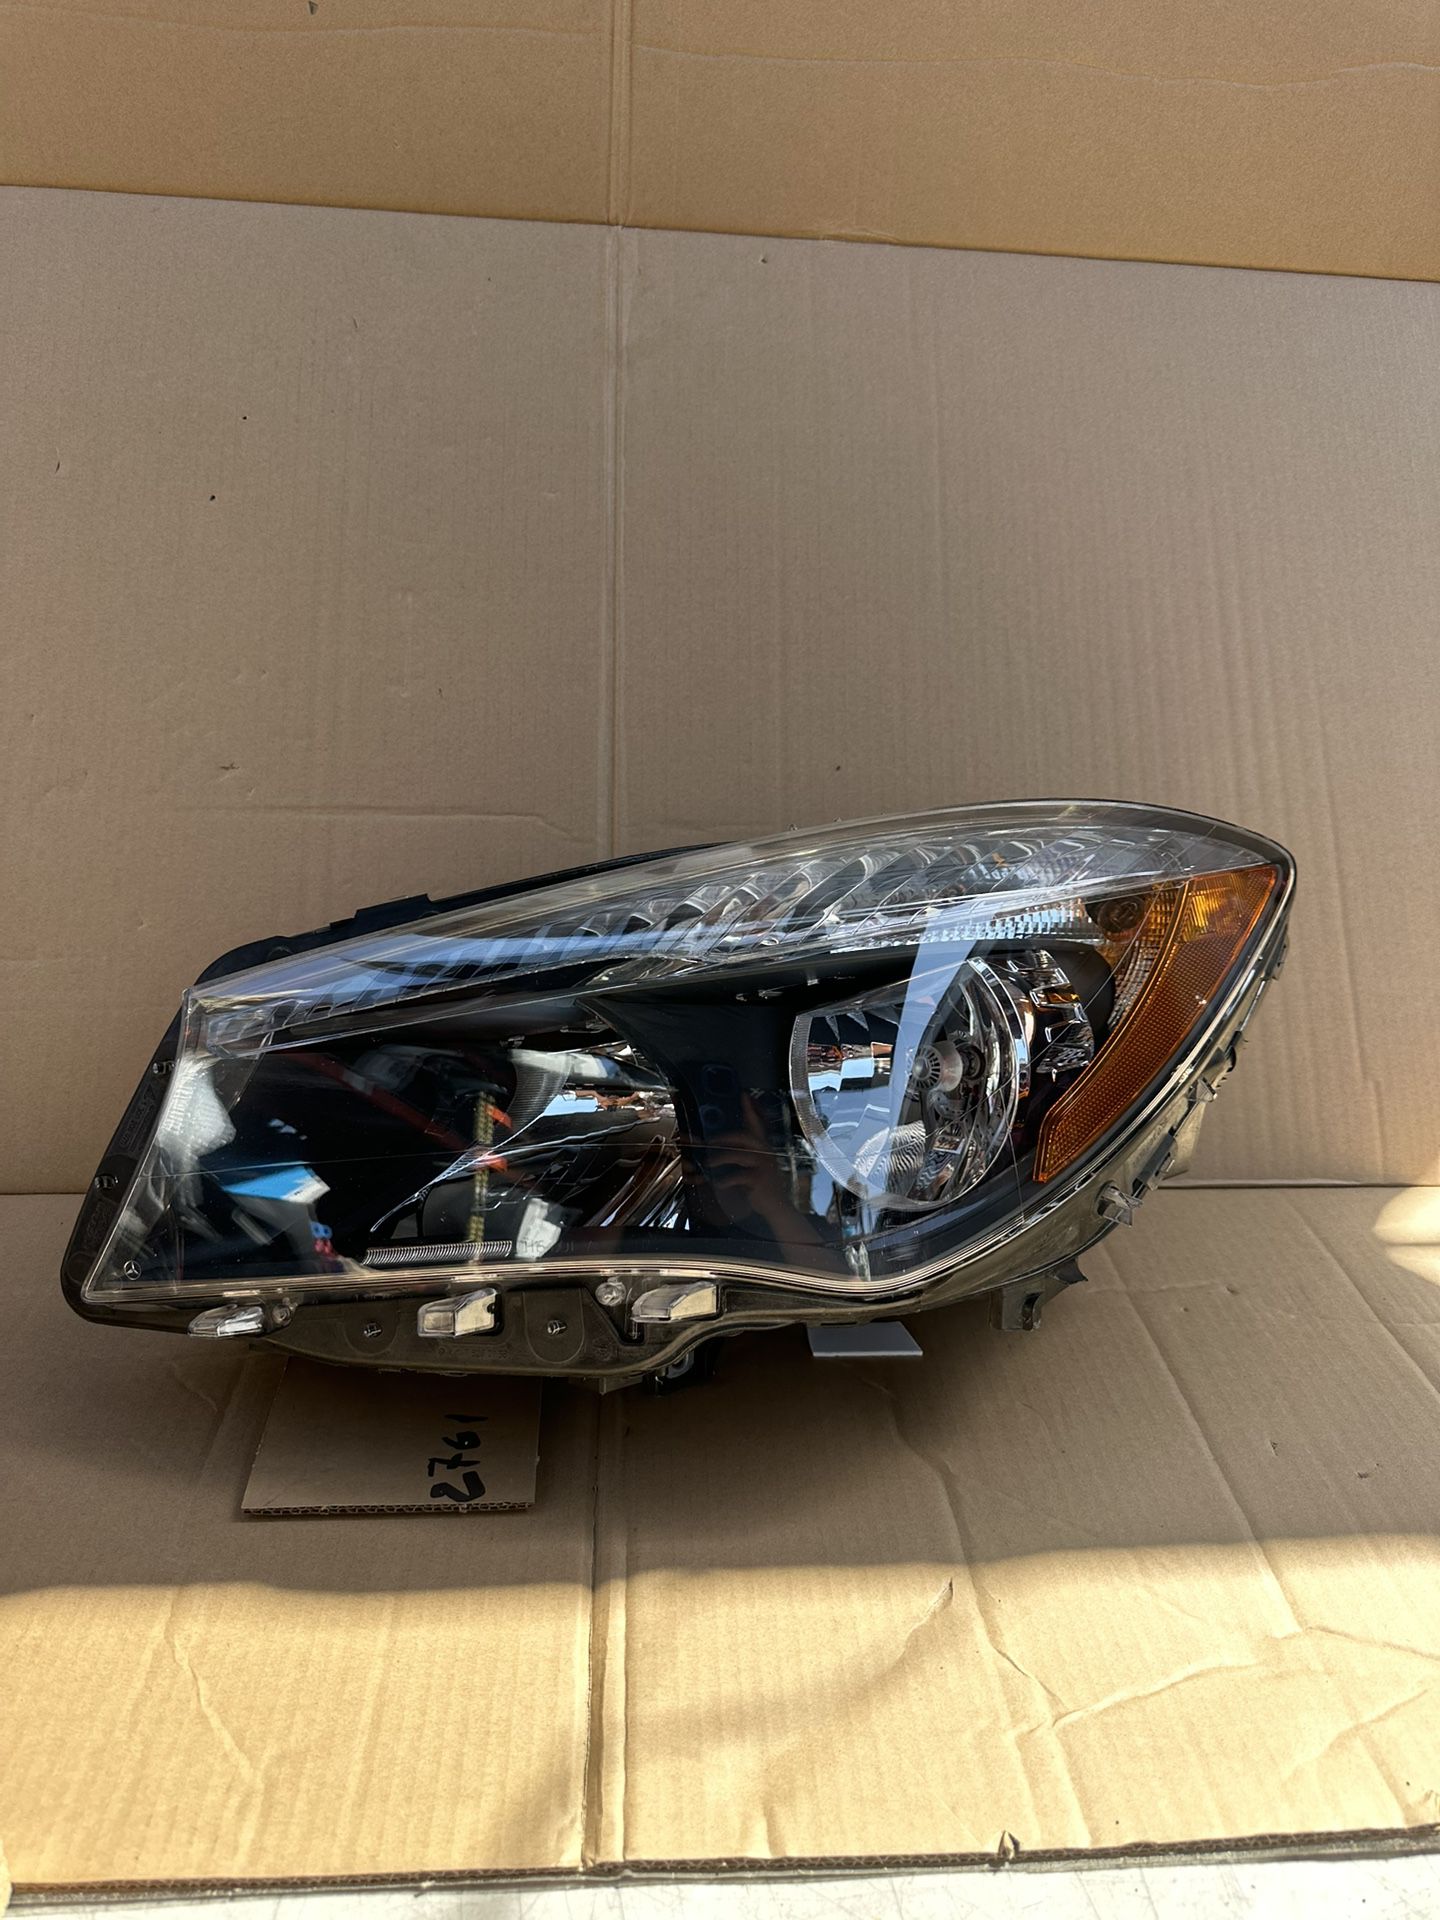 2014-2019 Mercedes CLA CLA200 CLA250 Halogen Headlight LH Left Driver OEM